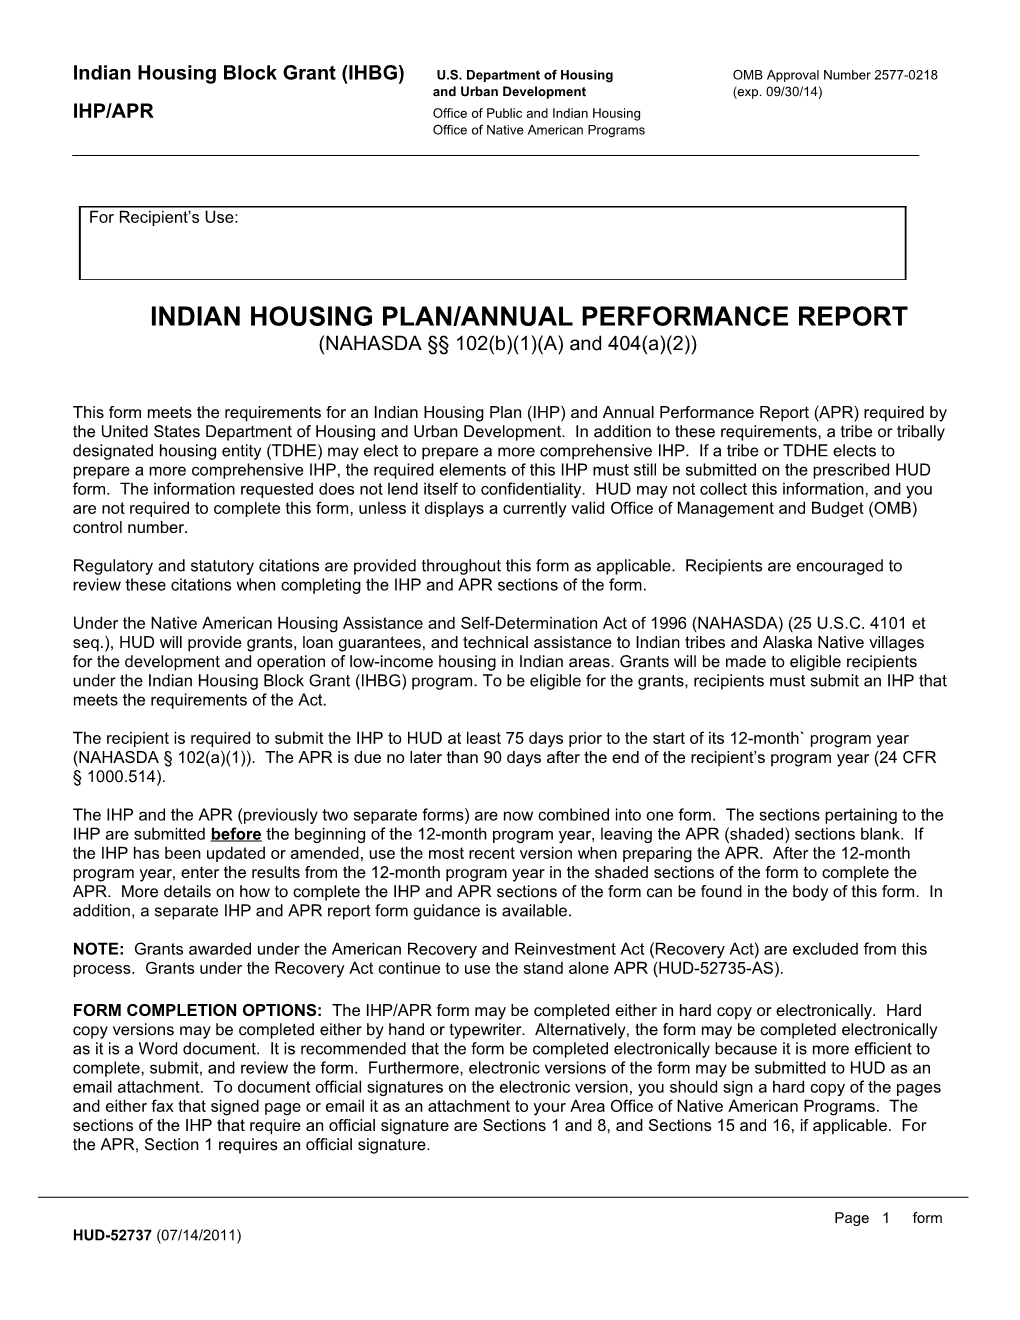 Indian Housing Plan/Annual Performance